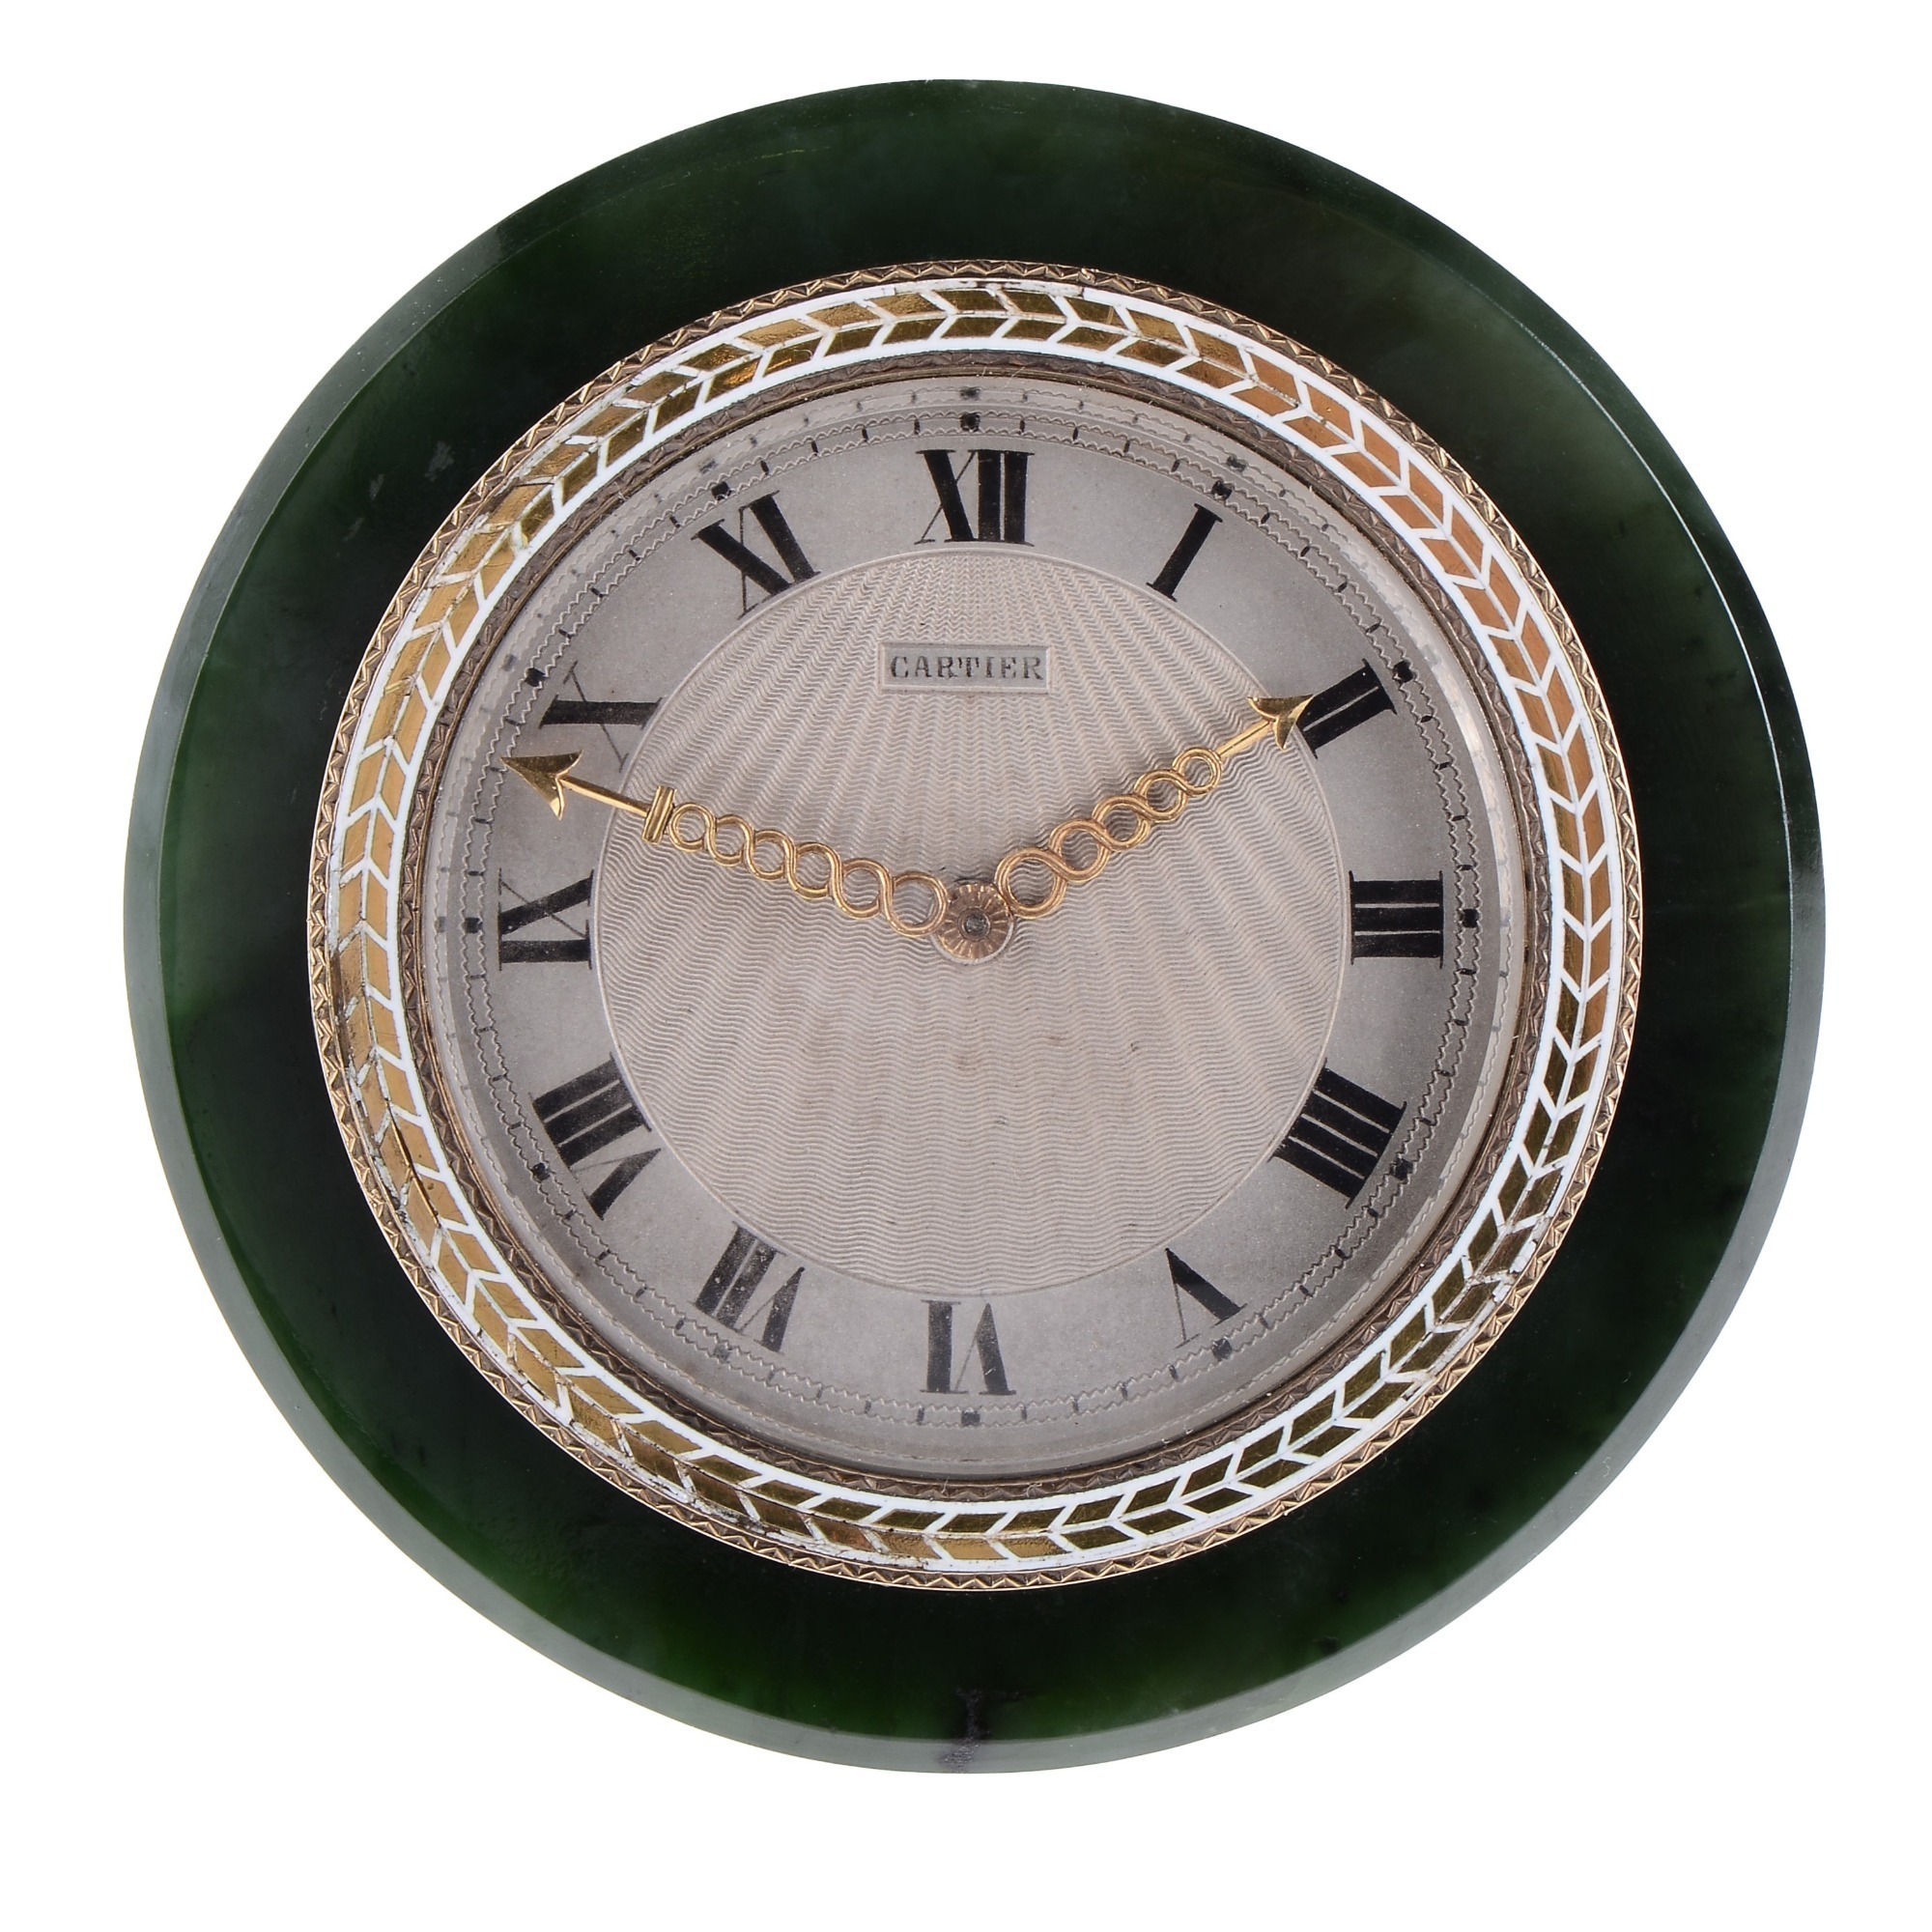 Cartier Art Deco Jade Gold And Enamel Easel Back Desk Clock